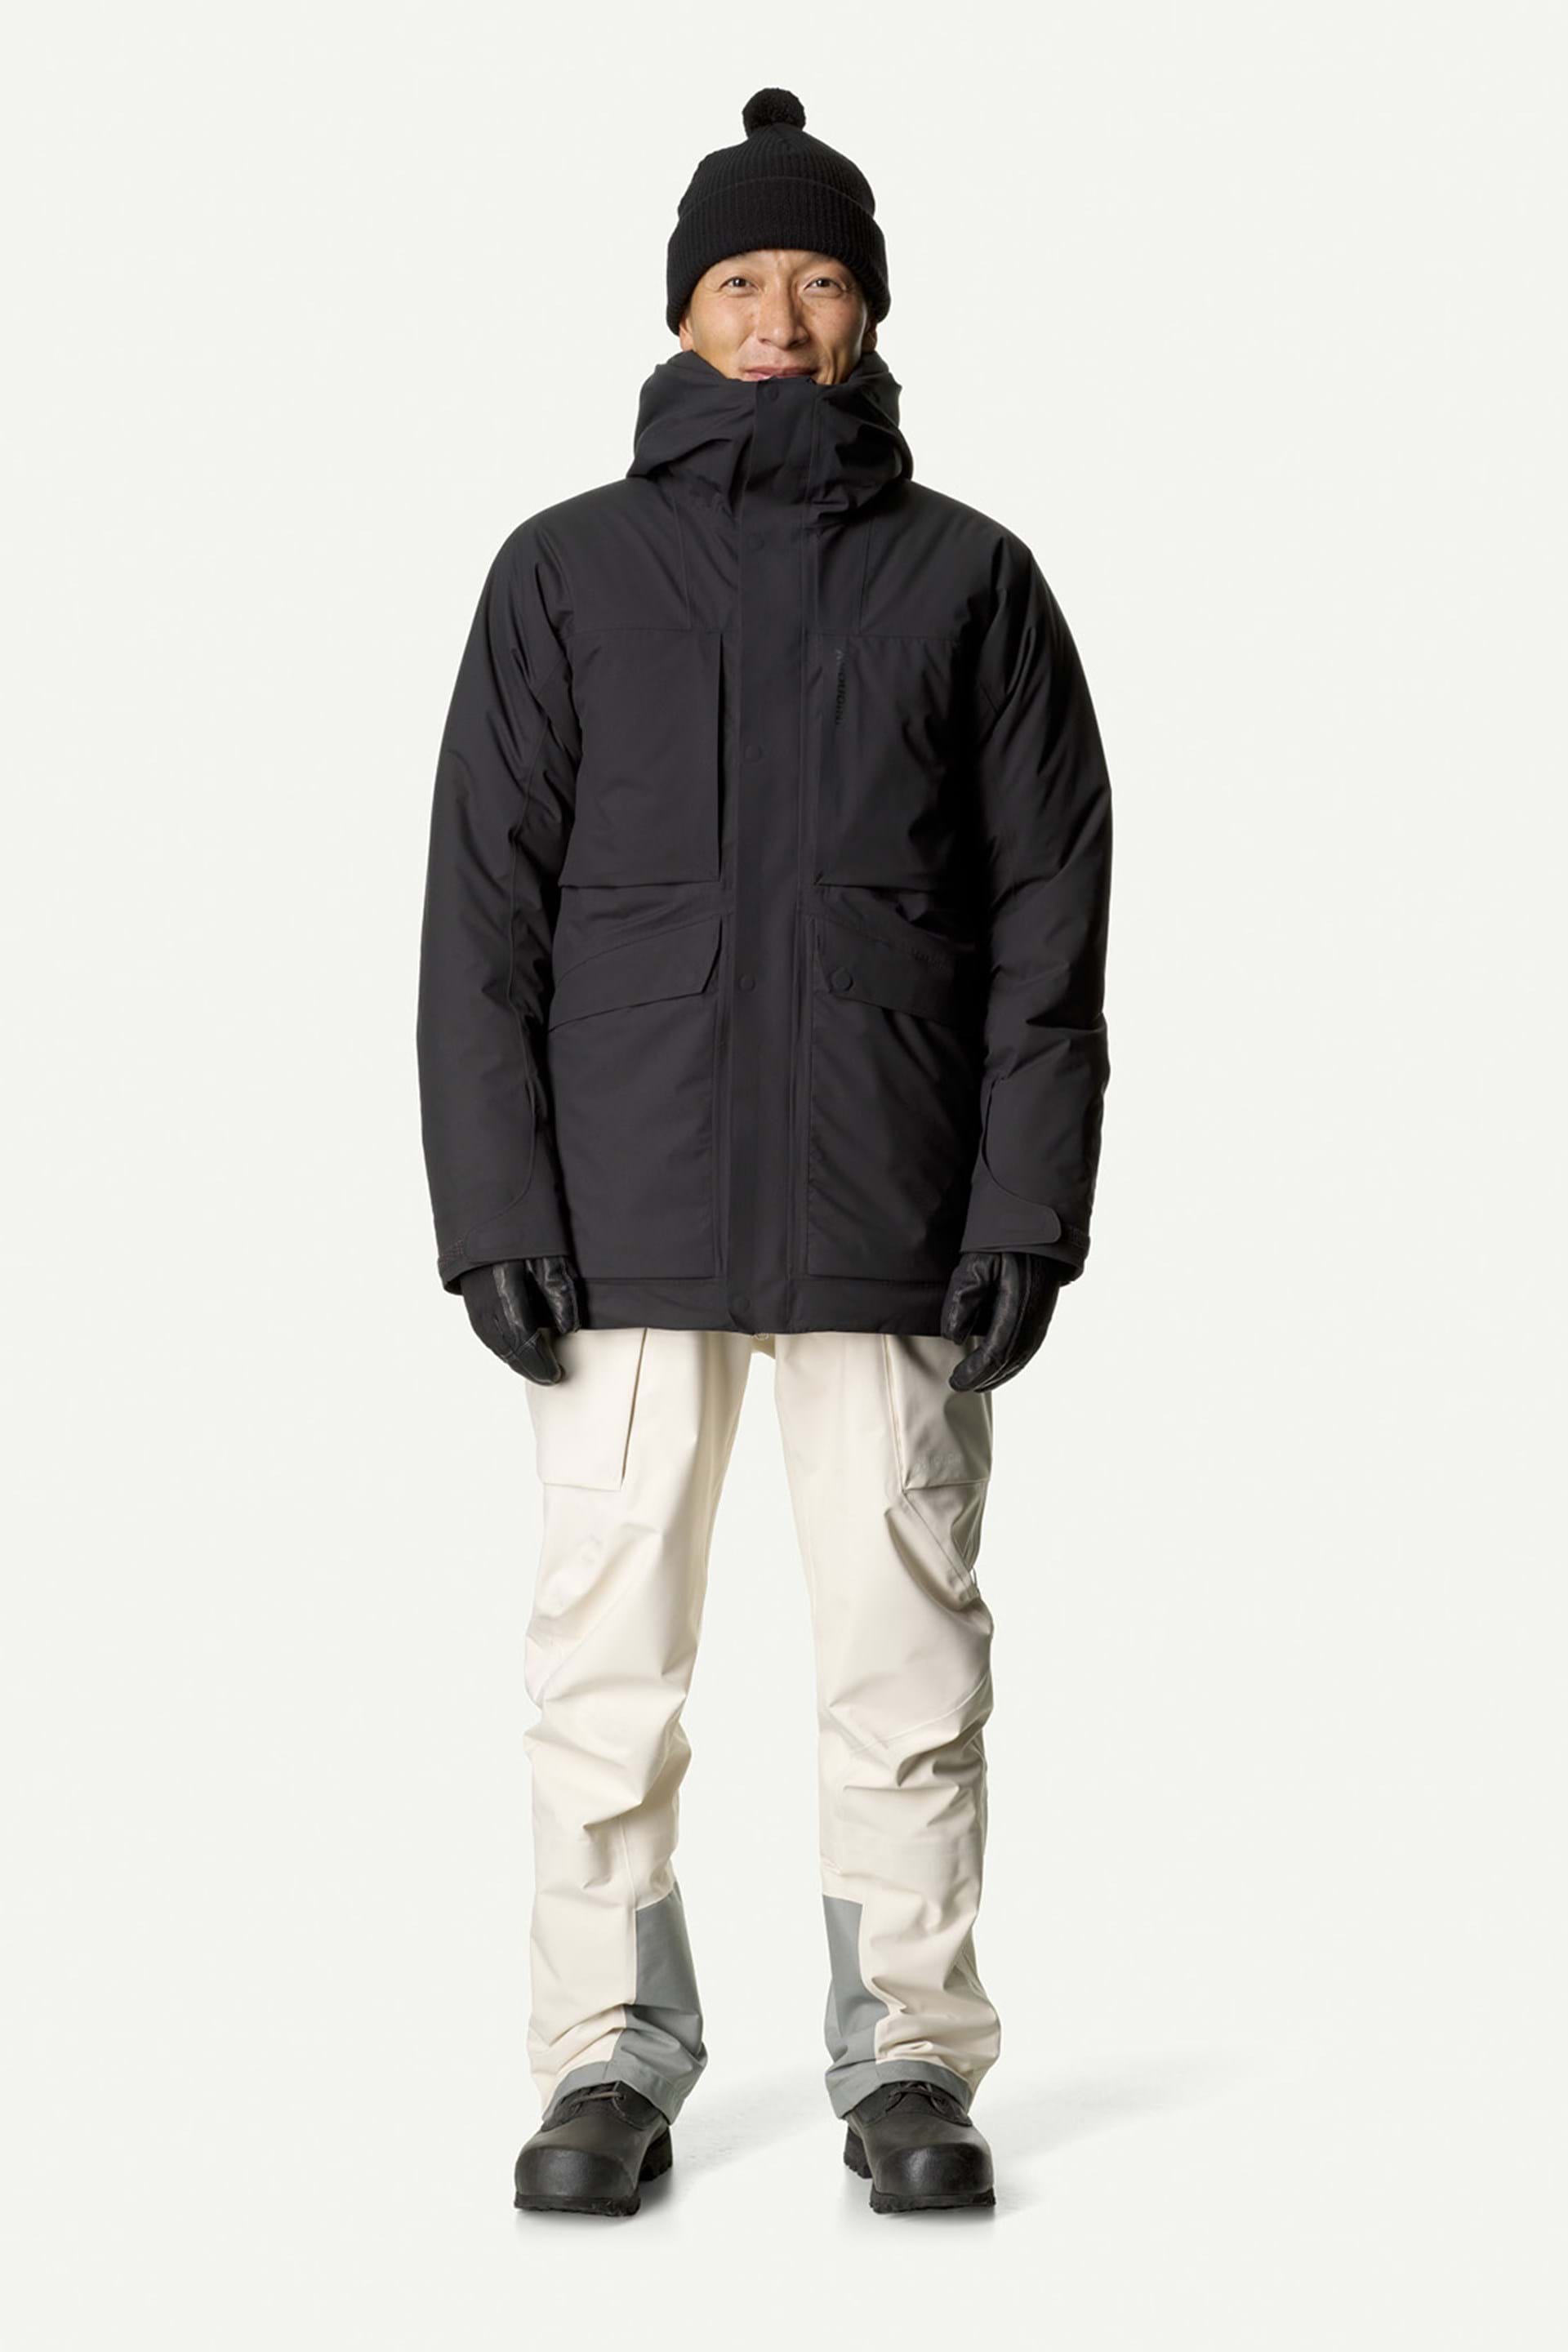 https://api.houdinisportswear.com/_images/1427fbab-7778-446e-af96-fb950f32bf7b/houdini-sportswear-ms-fall-in-jacket_2_2x3.jpg